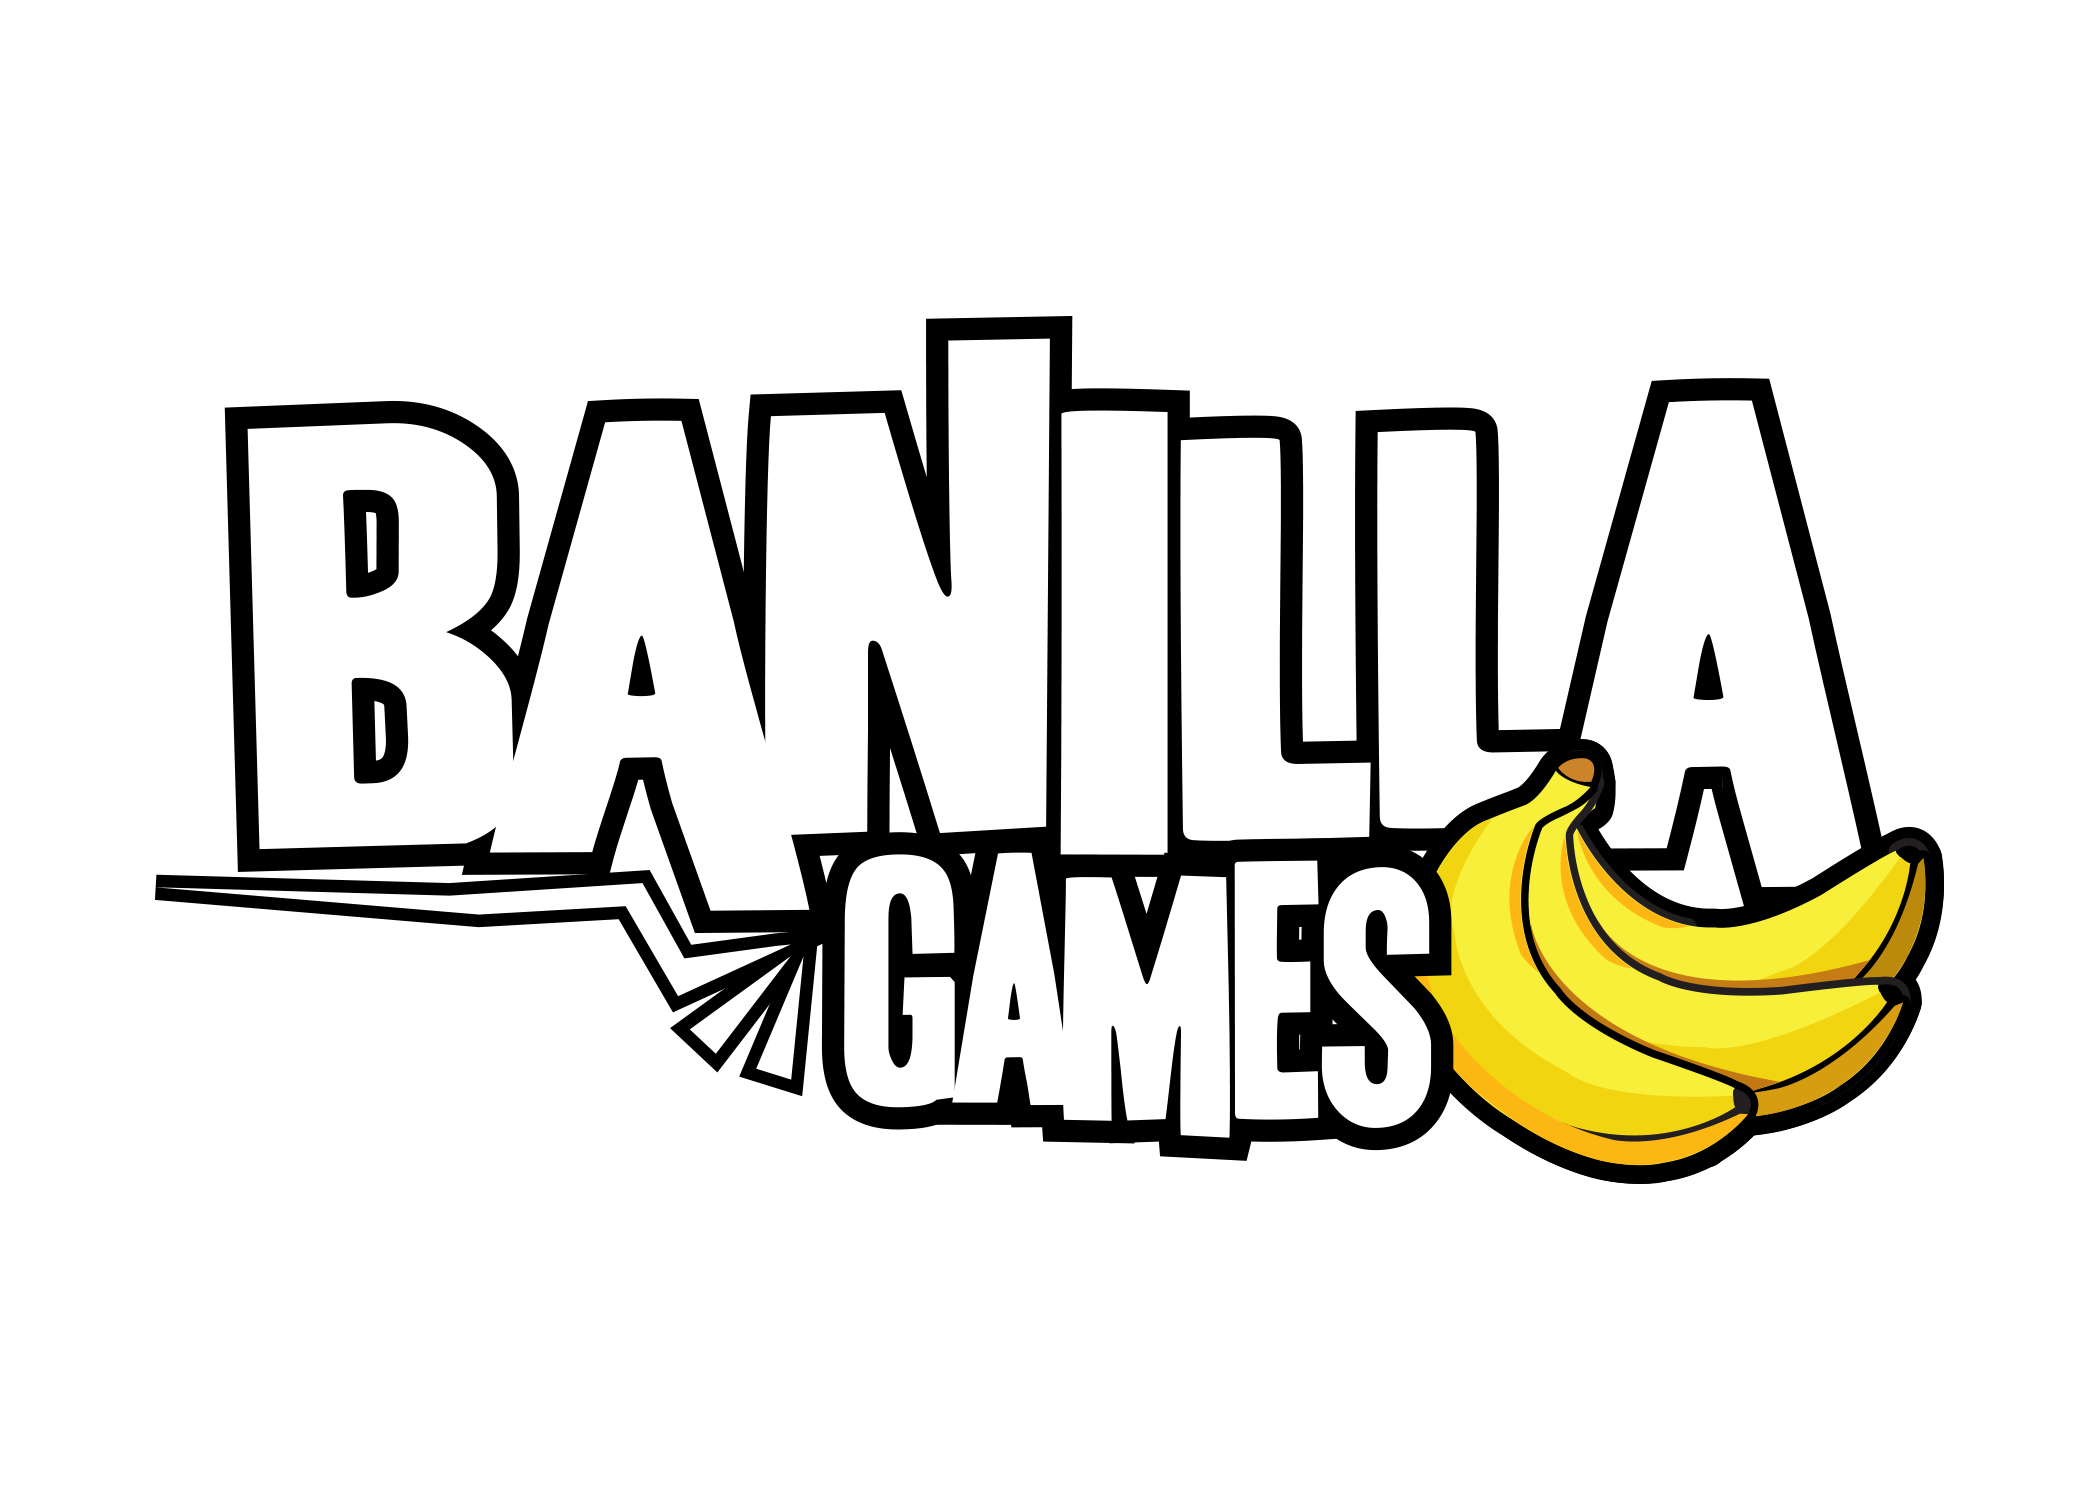 Banilla Games